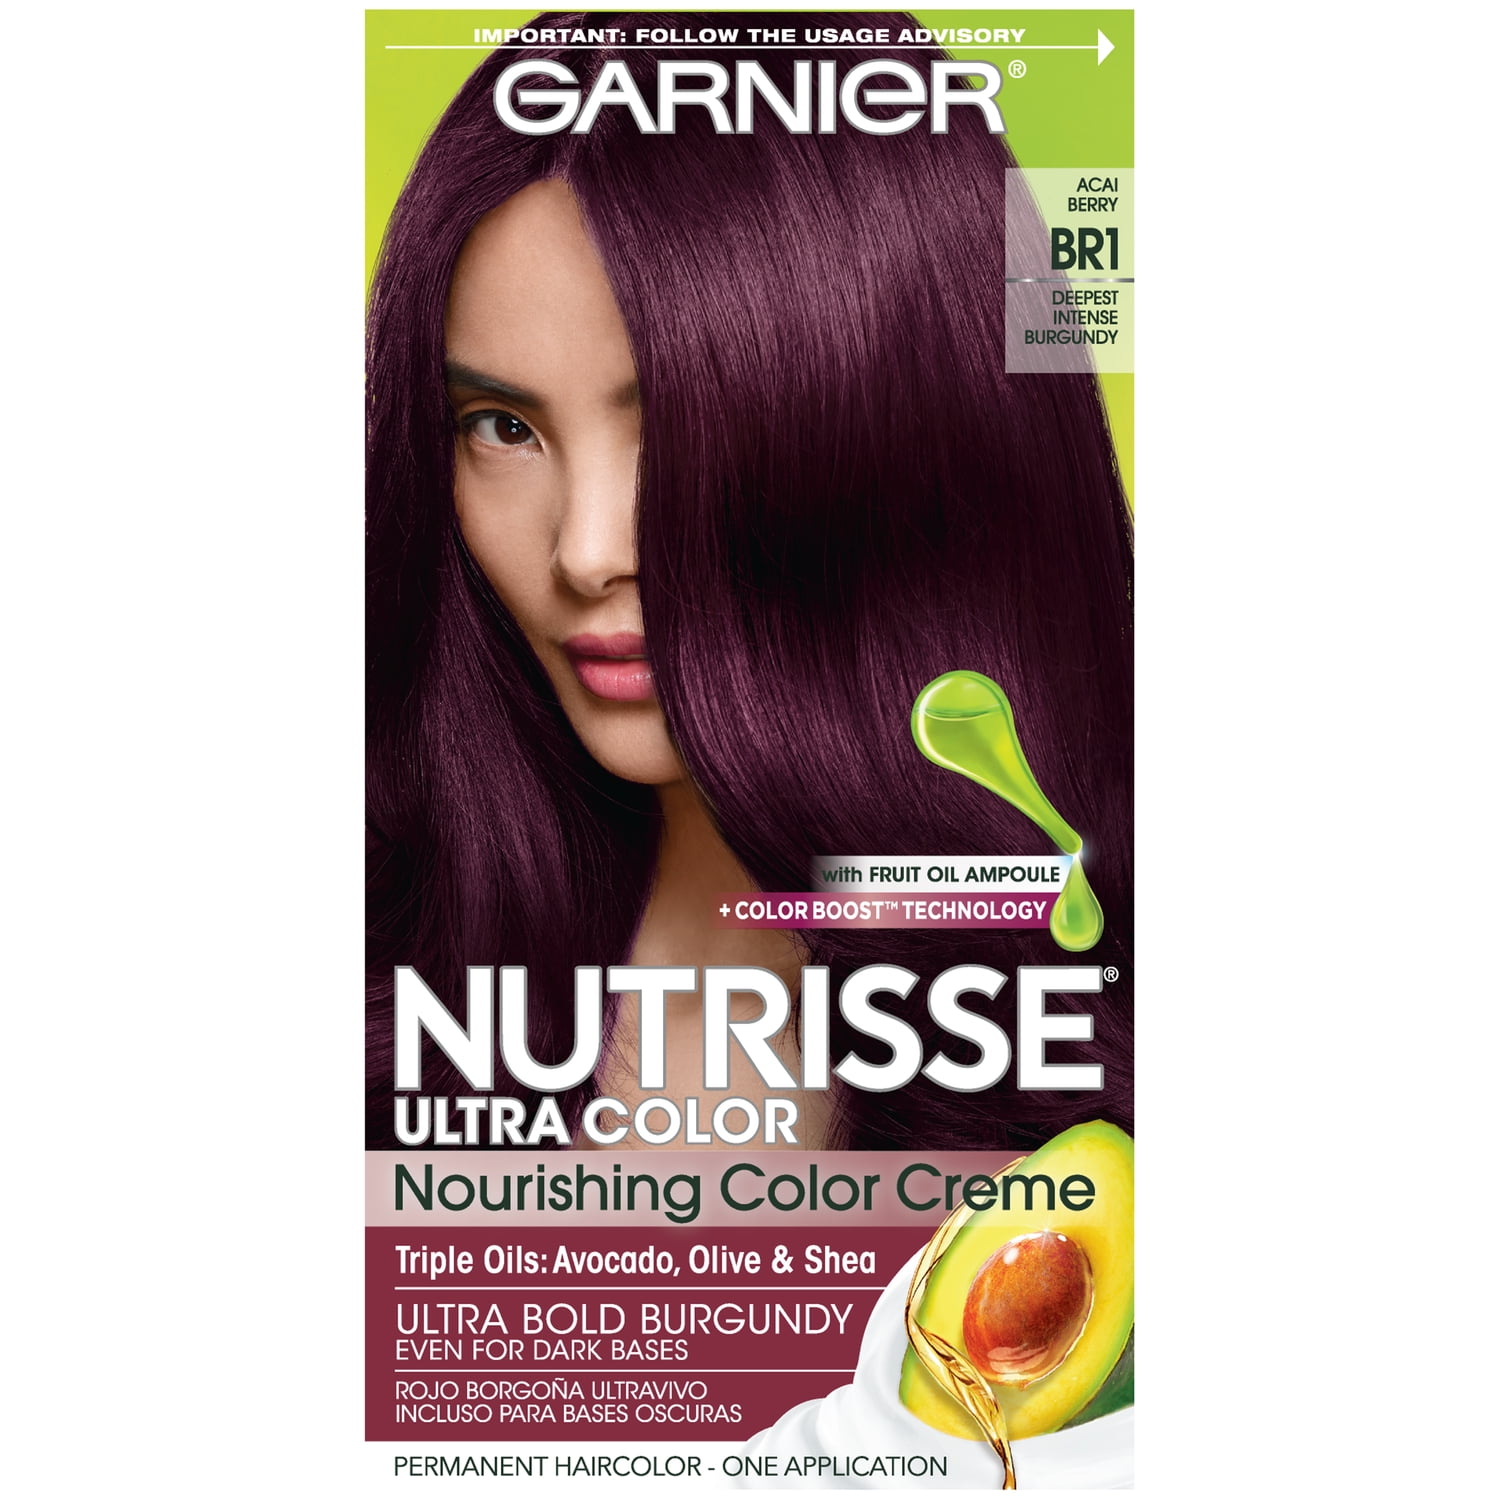 Garnier Nutrisse Ultra Nourishing Hair Color Creme, BR1 Deepest Intense Bur...